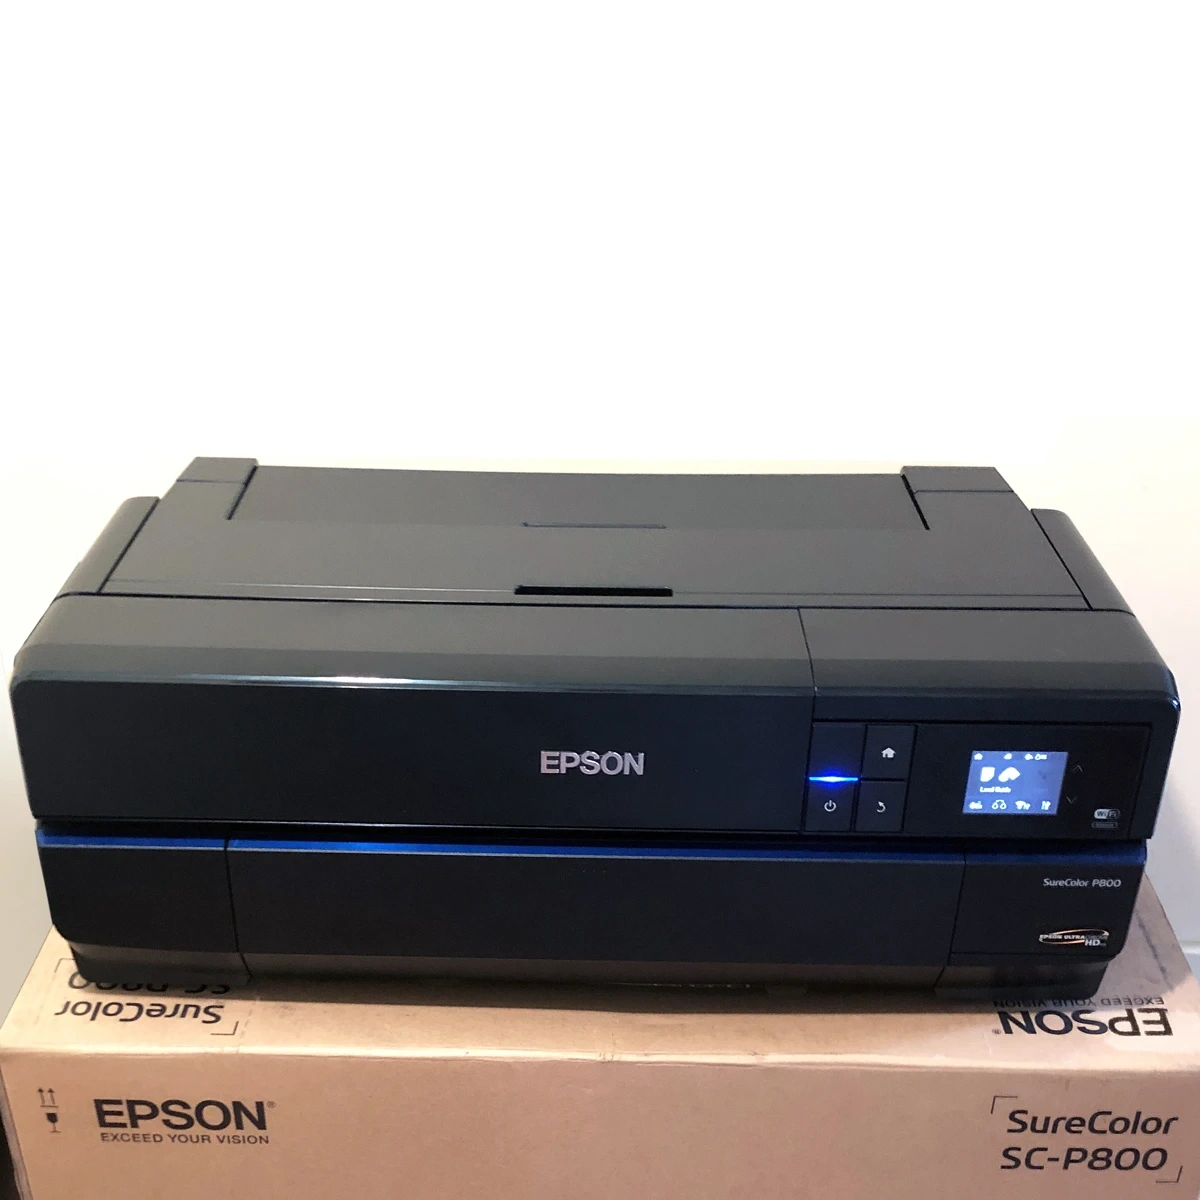 Epson SureColor P800 Printer Sitting On Epson Box